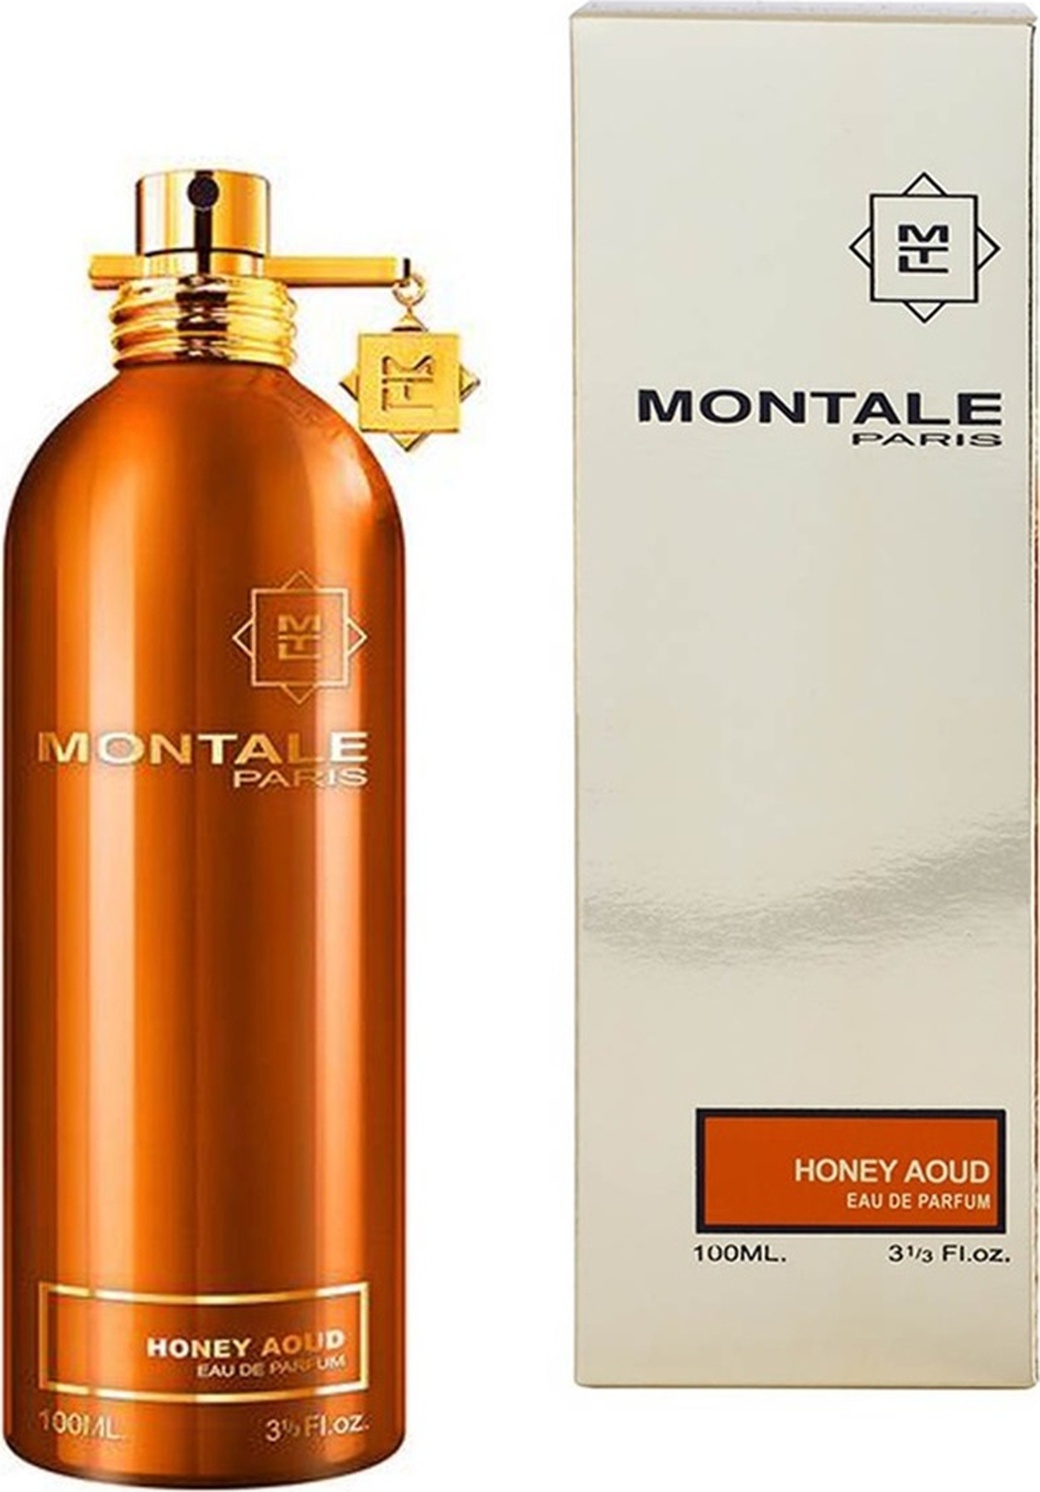 Montale ноты. Montale Honey Aoud. Парфюмерная вода Montale Honey Aoud. Монталь Хоней ауд. Tester Montale Amber & Spices EDP 100 ml.